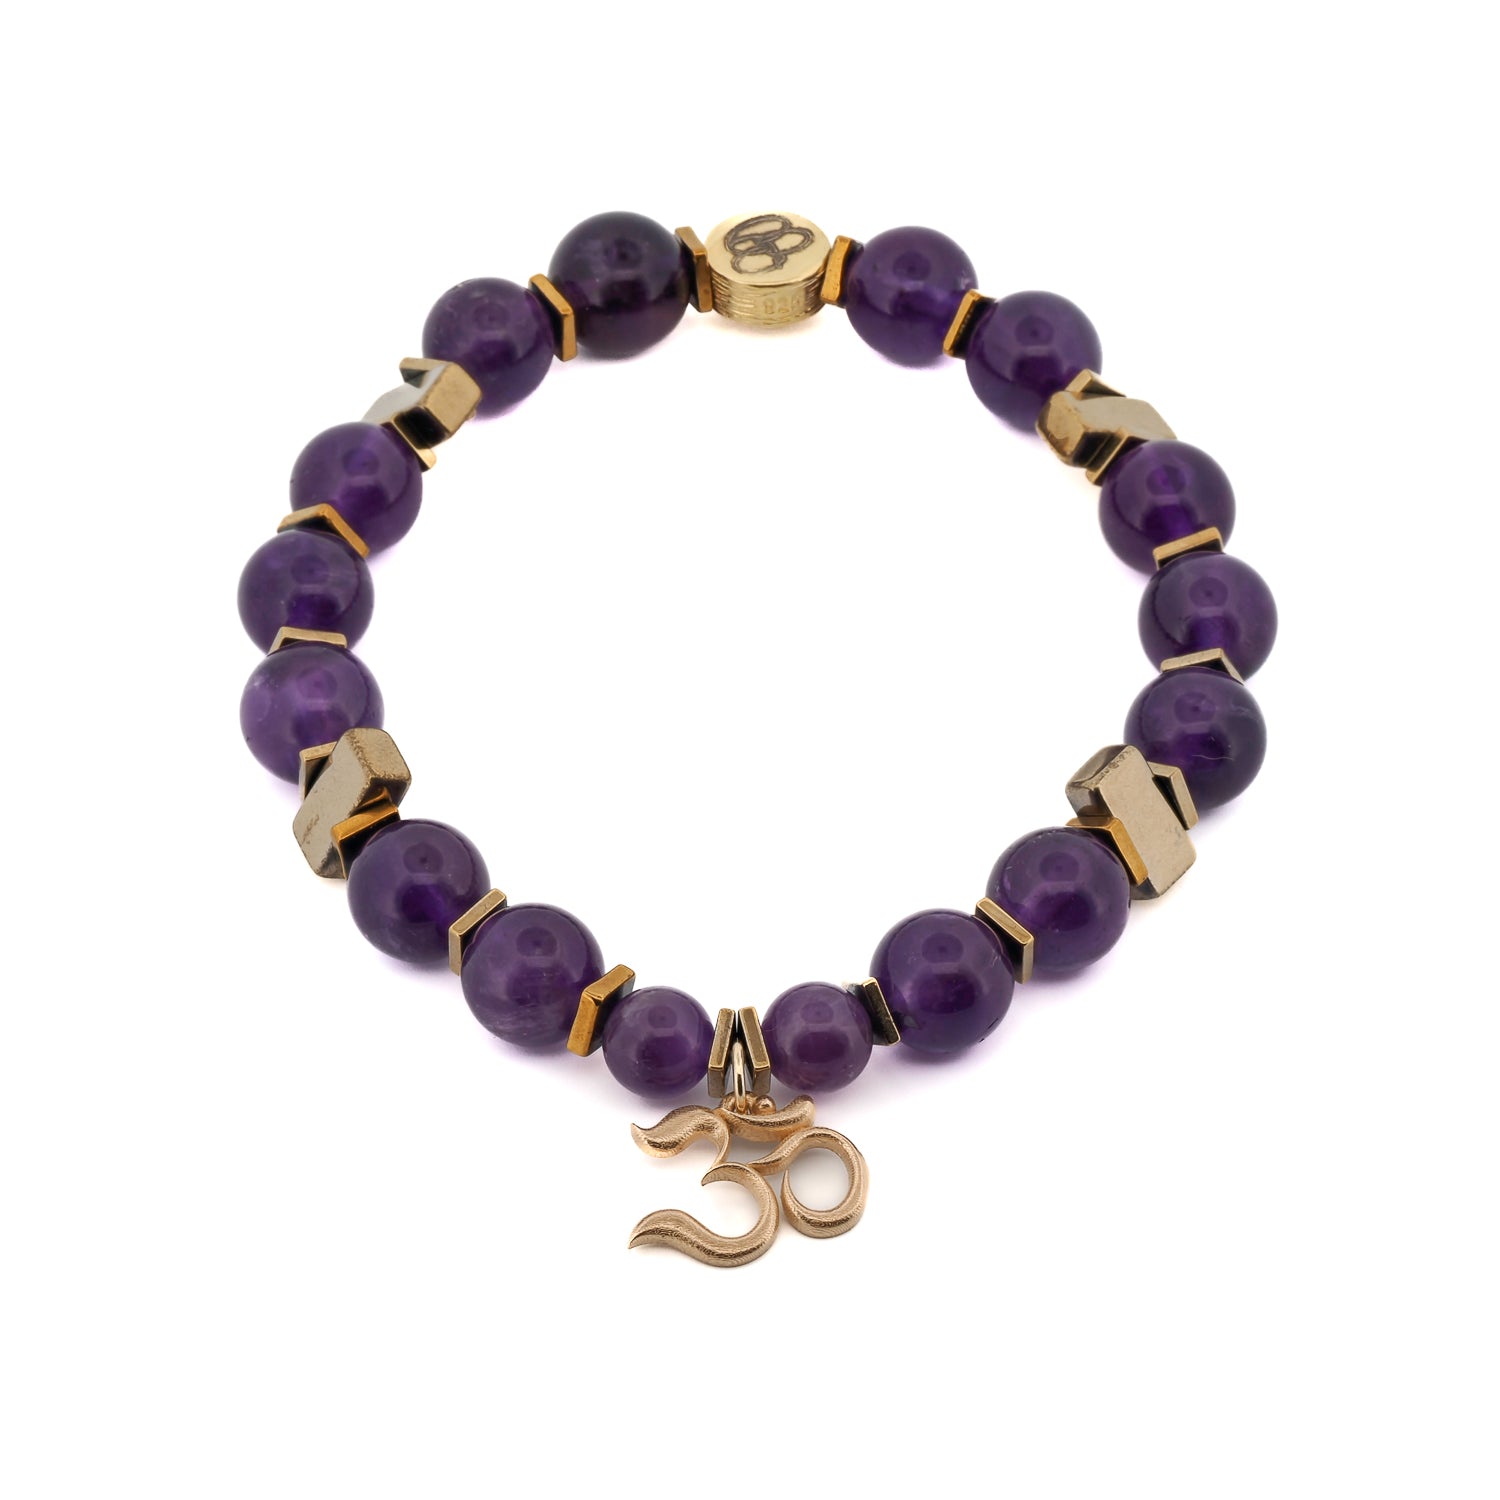 Solid Gold Om Mantra Charm Healing Amethyst Stone Beaded Bracelet